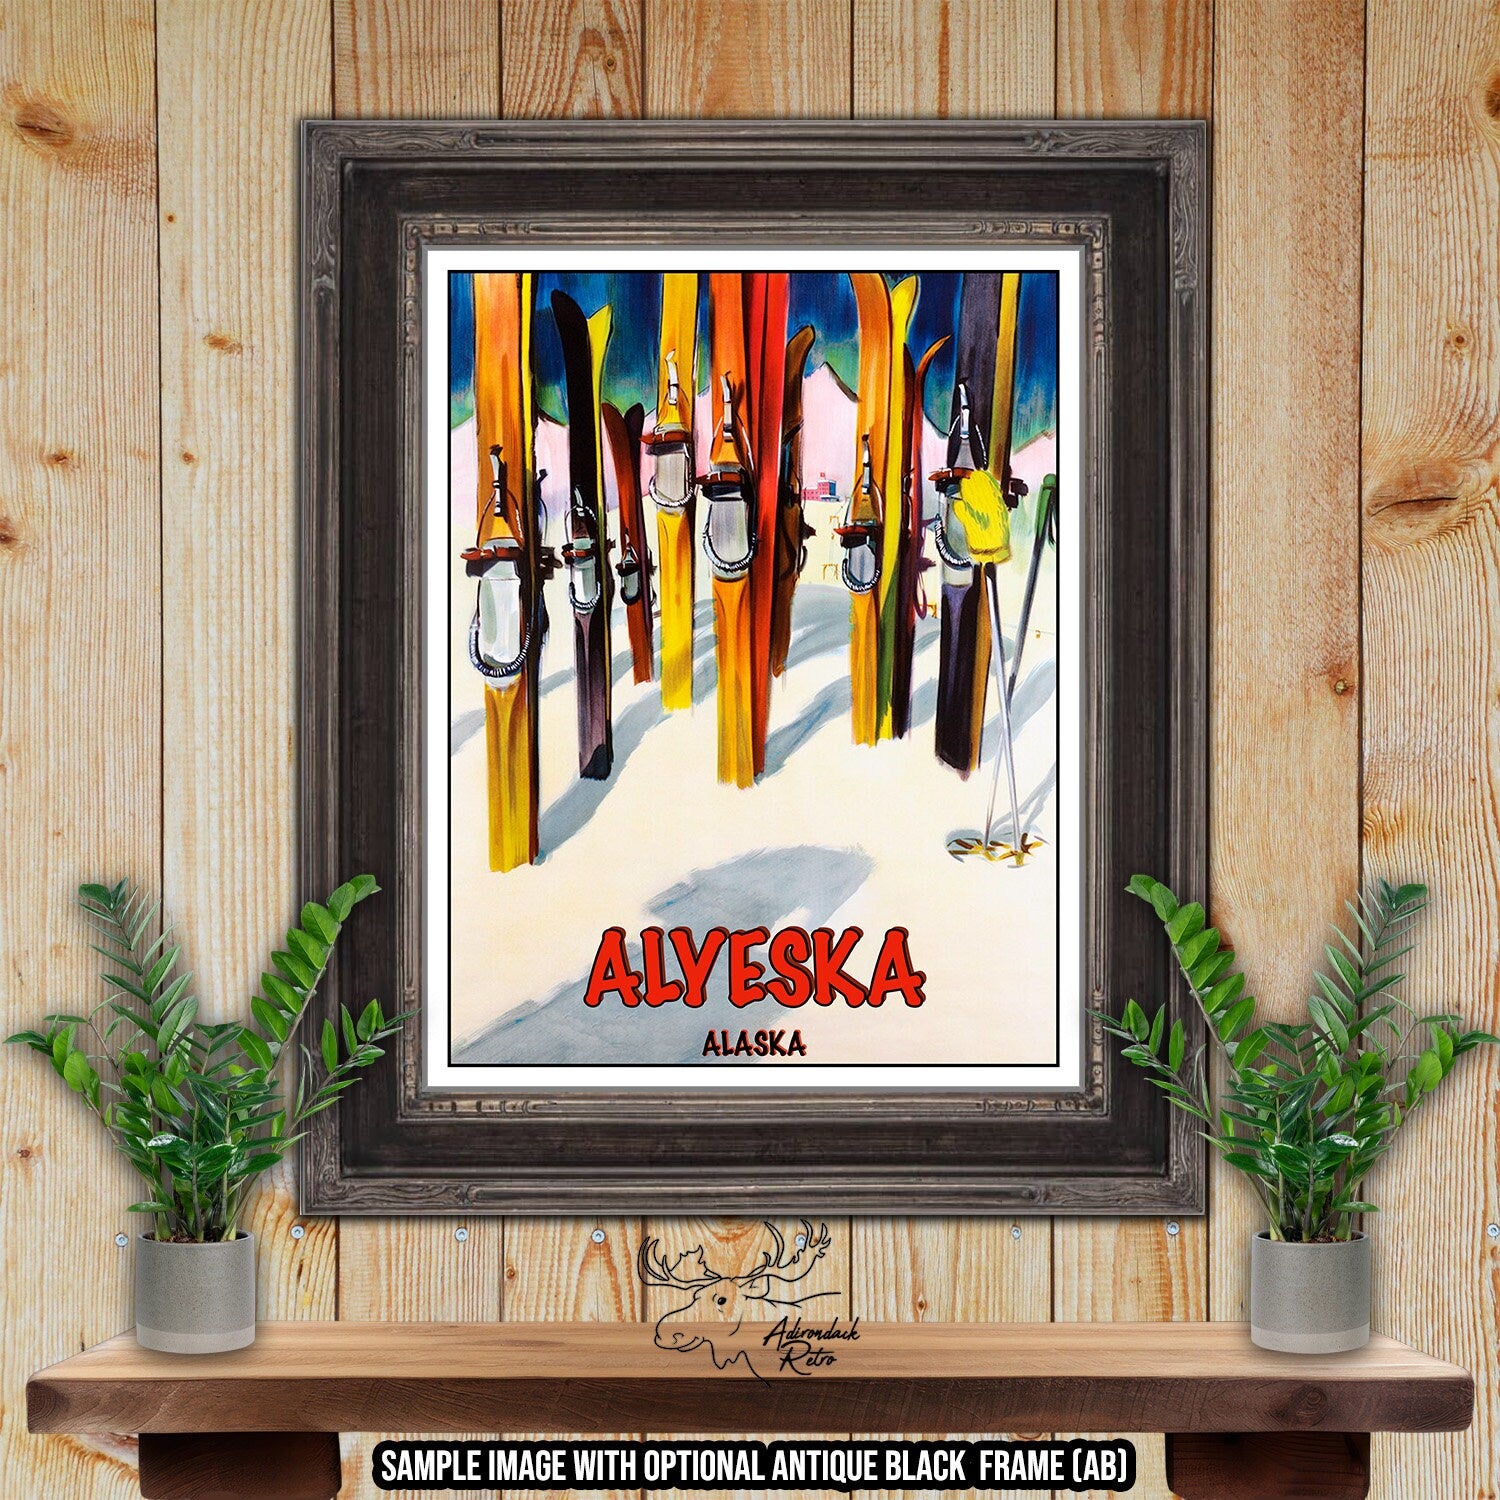 Alyeska Basin Ski Resort Print - Retro Alaska Ski Resort Poster at Adirondack Retro